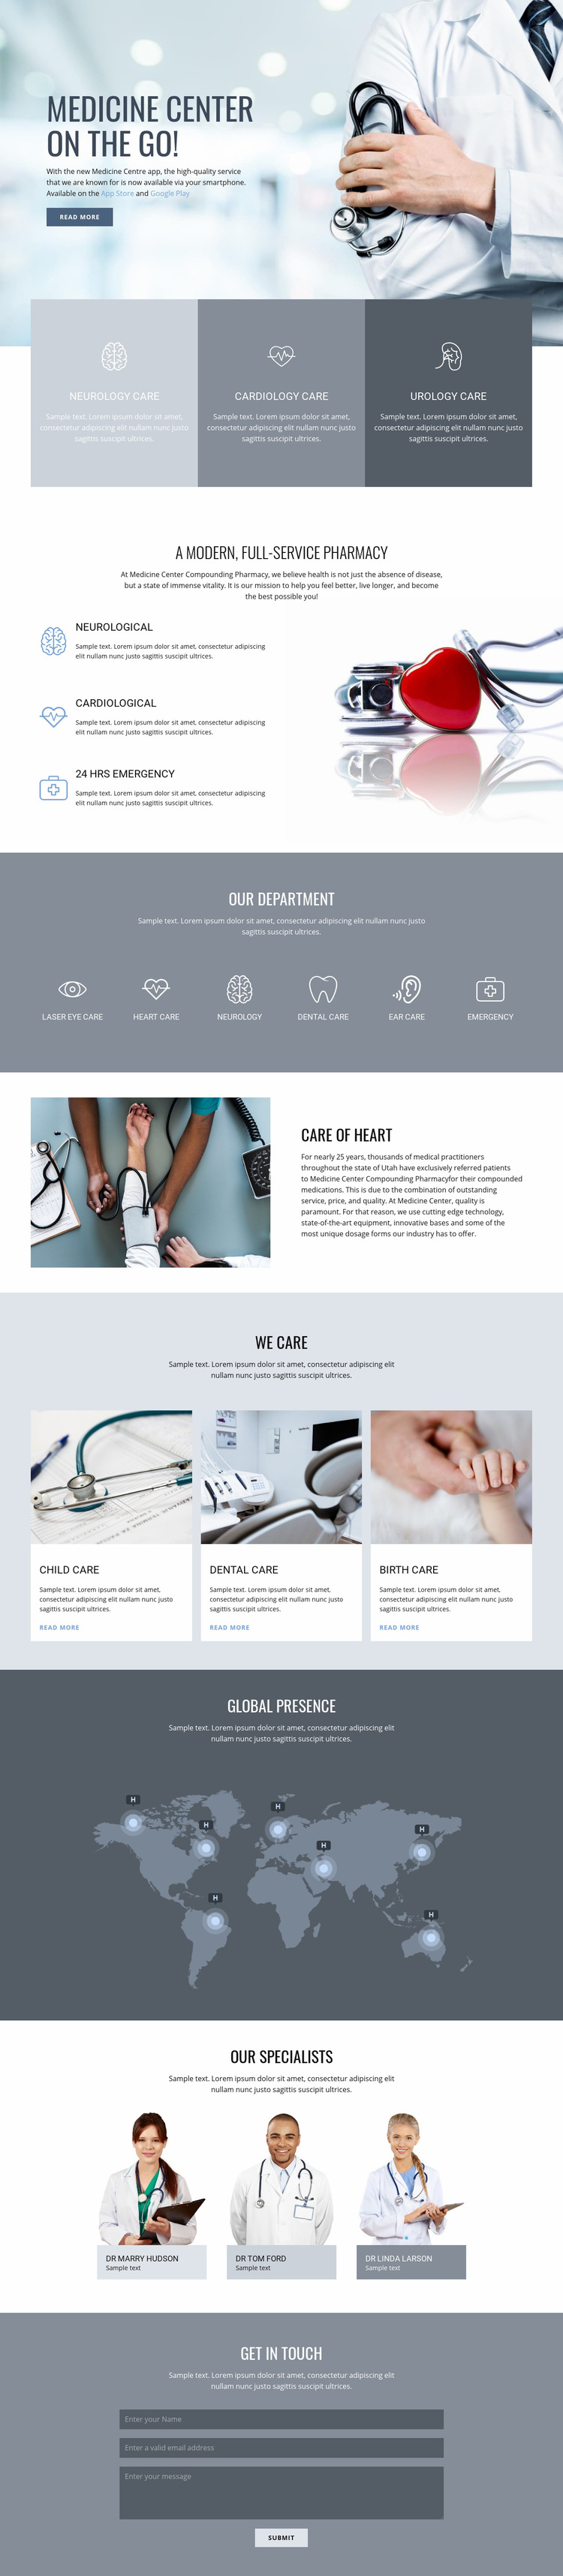 Center of quality medicine Web Page Design